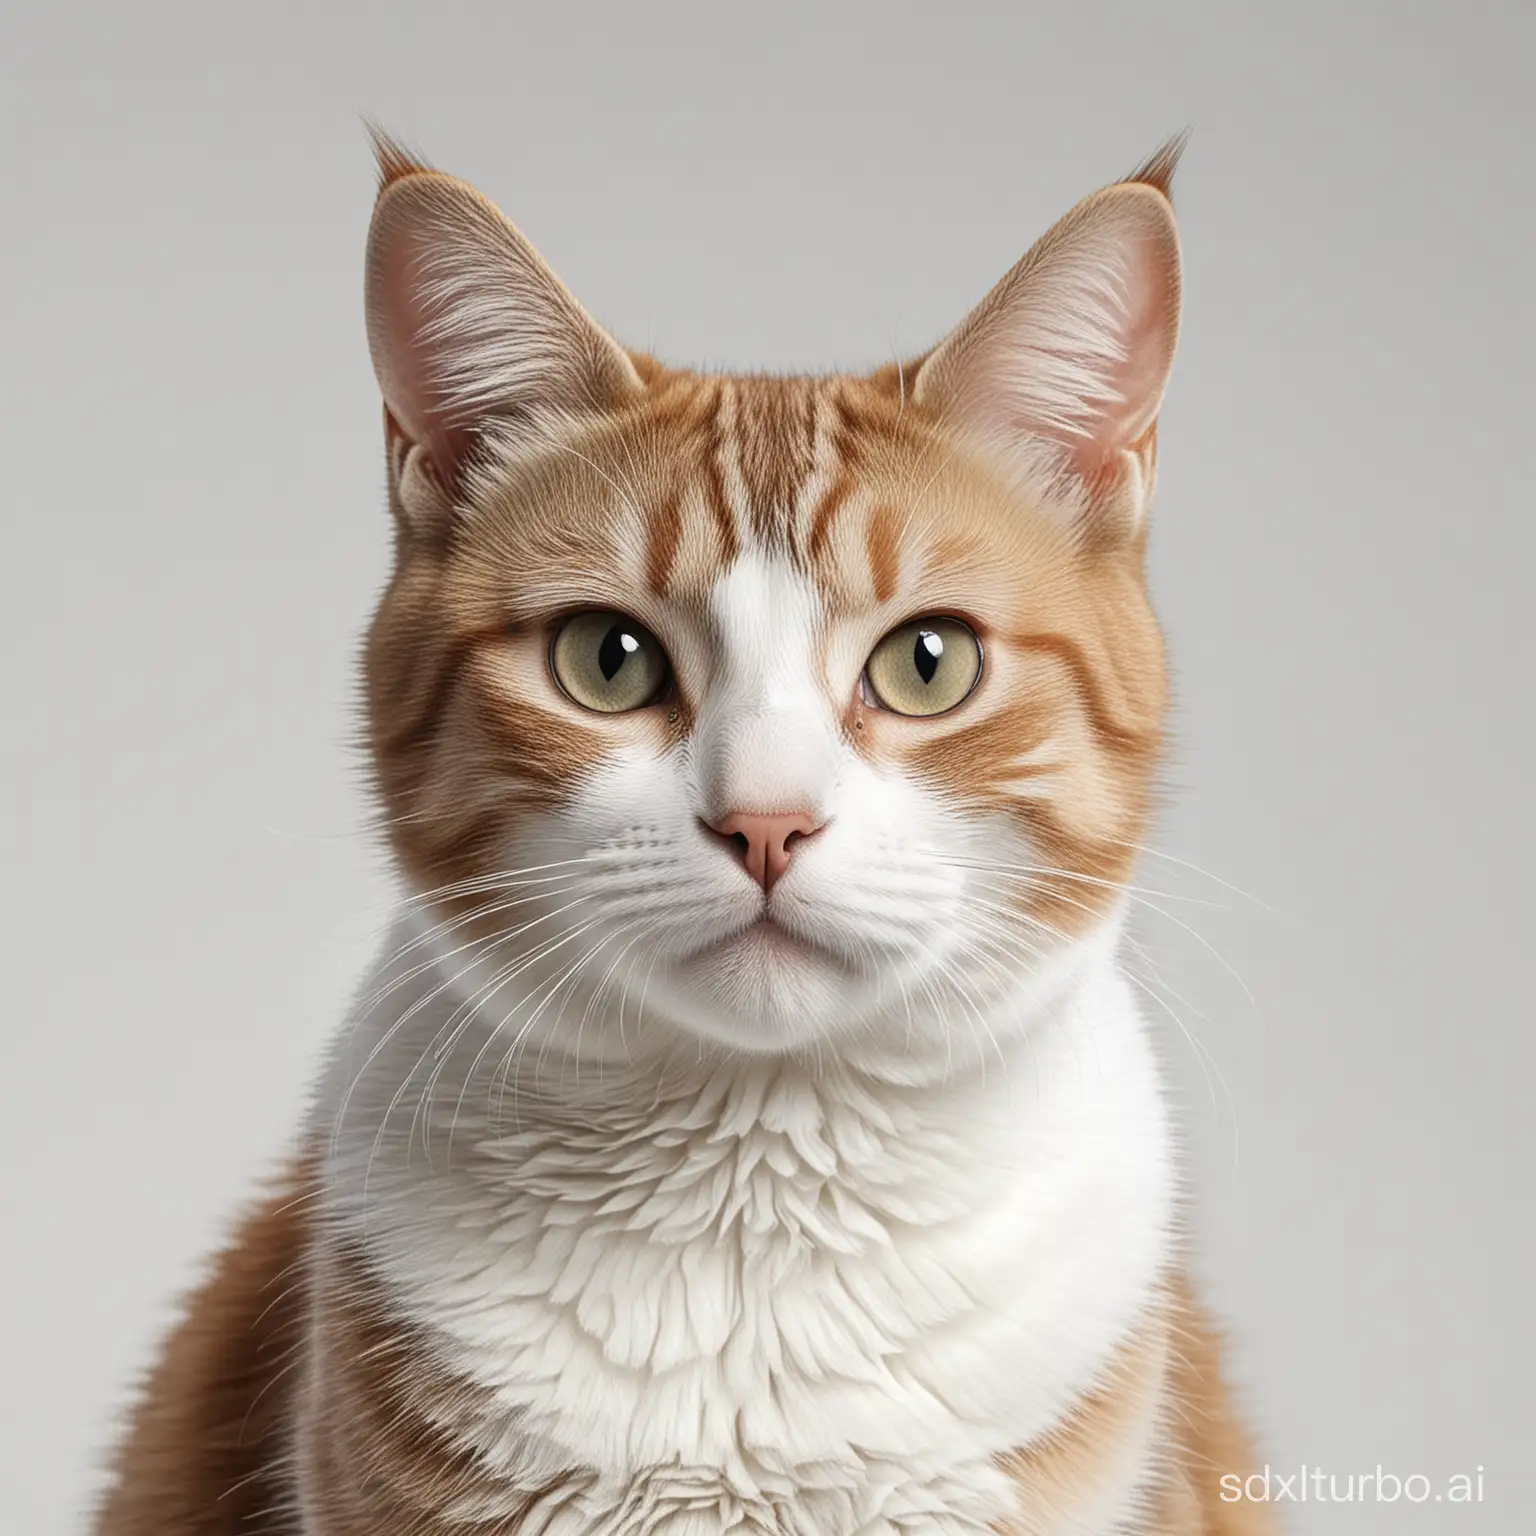 Curious-Cat-Portrait-on-White-Background